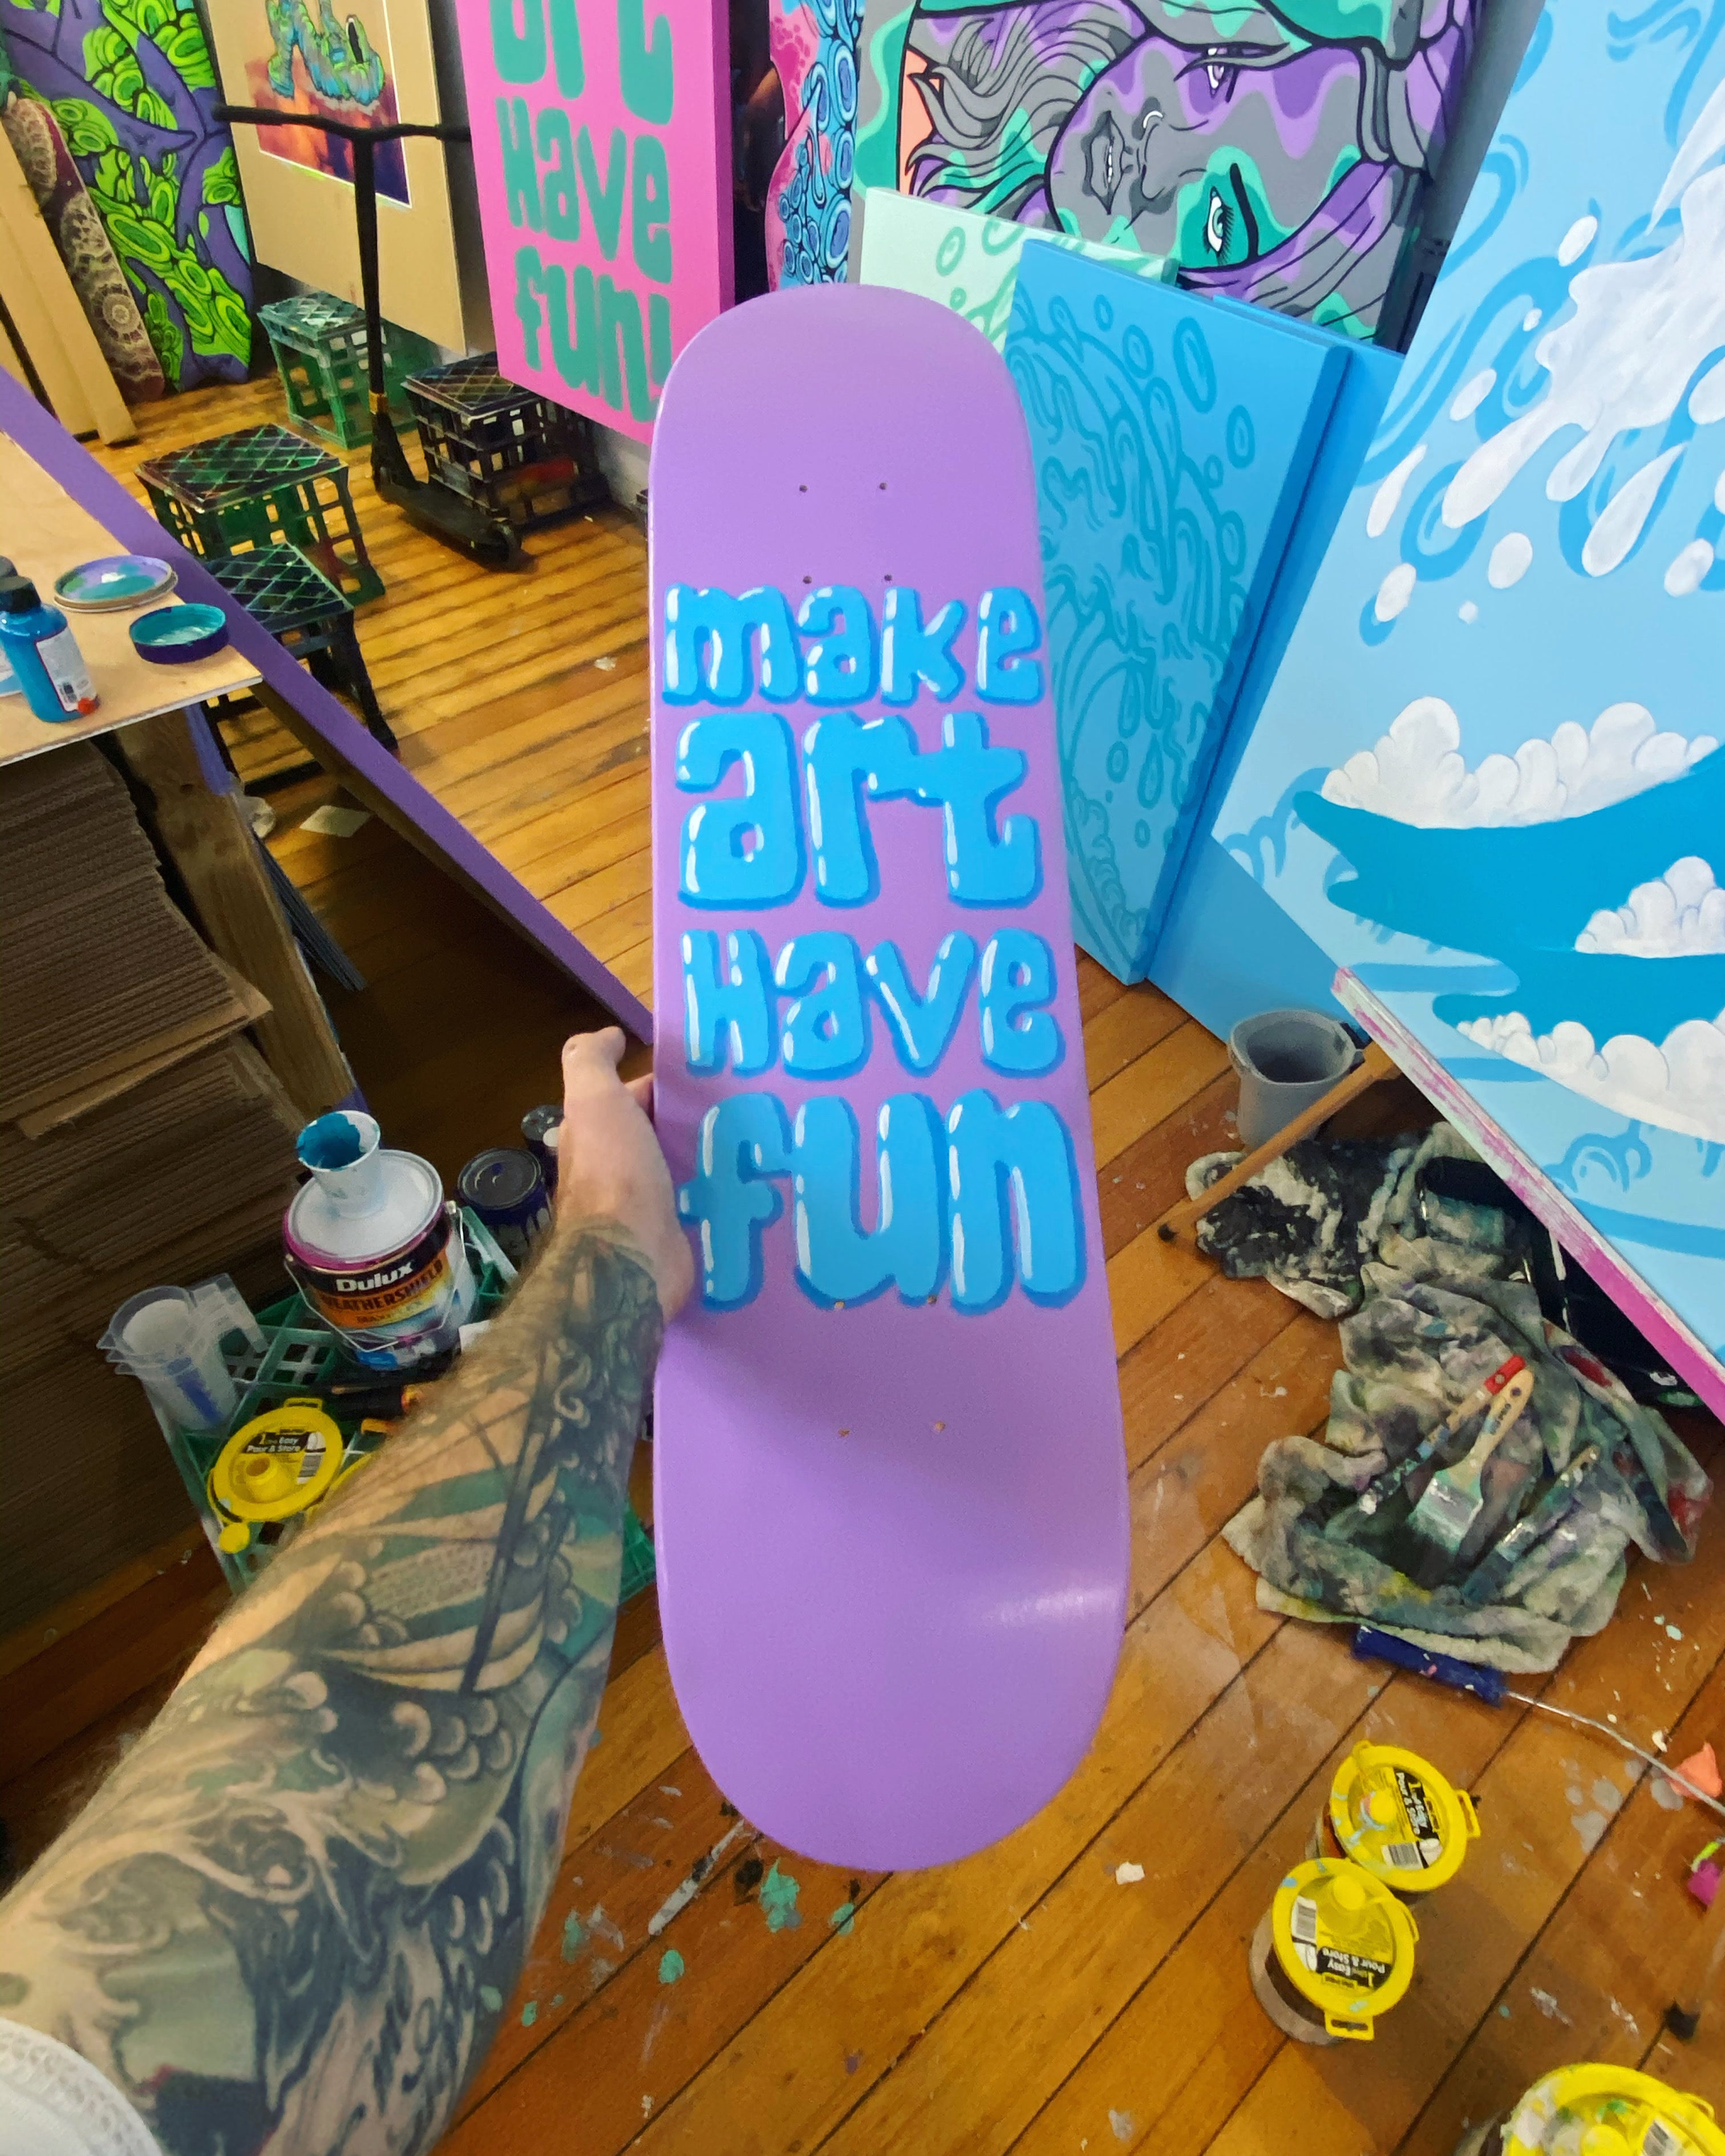 Original: Make Art, Have Fun skateboard art